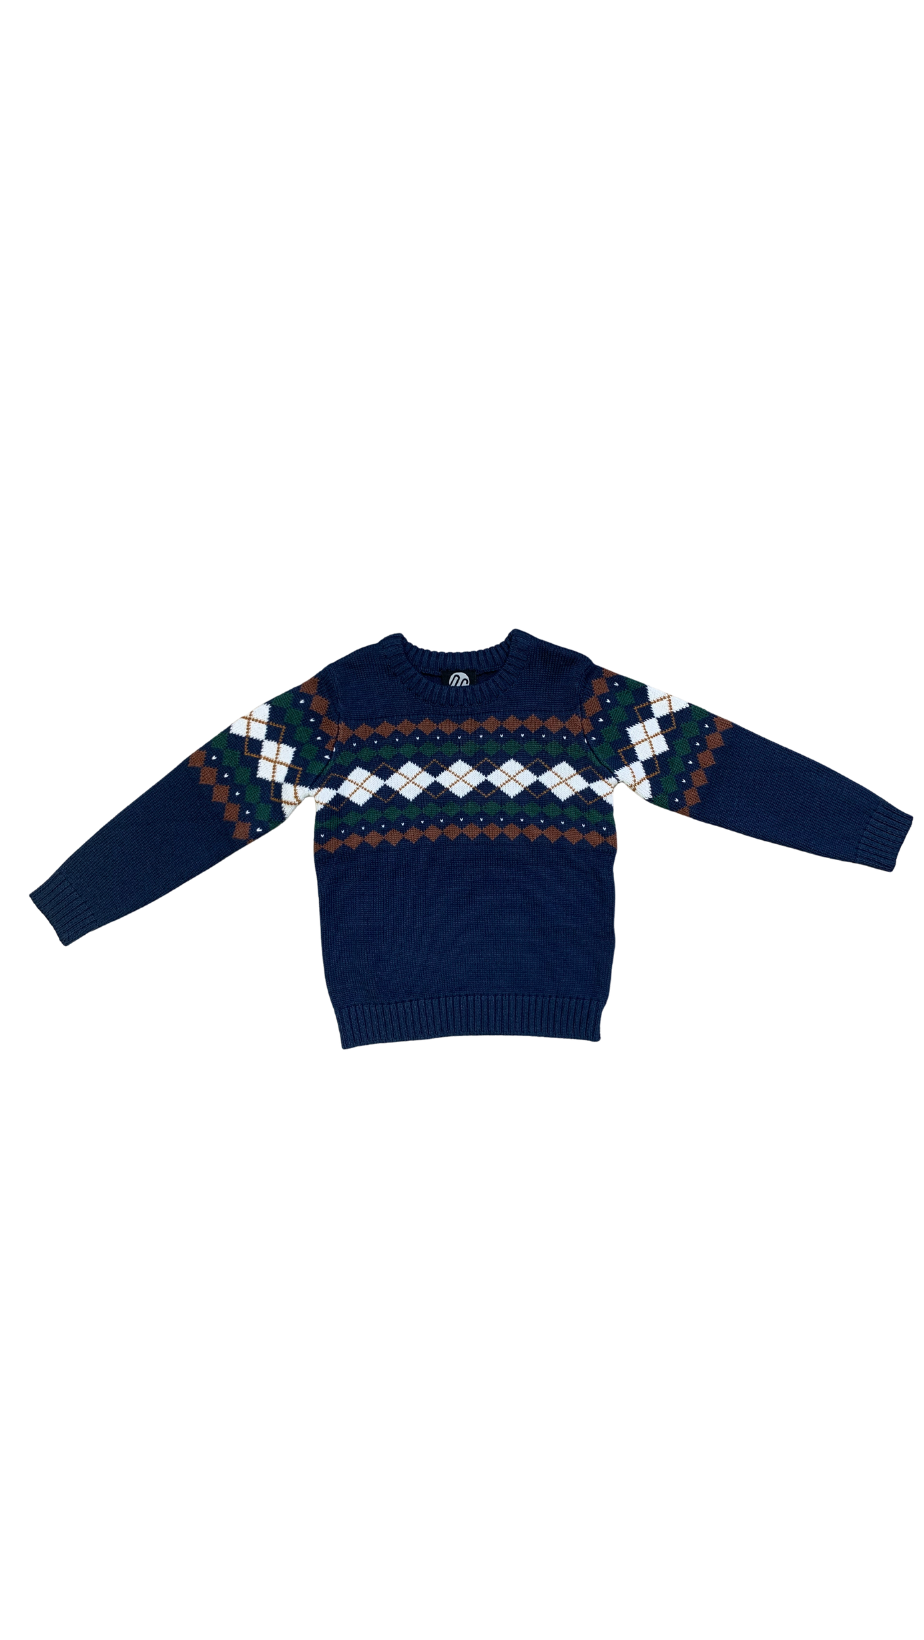 Youth Knit Crewneck Sweater